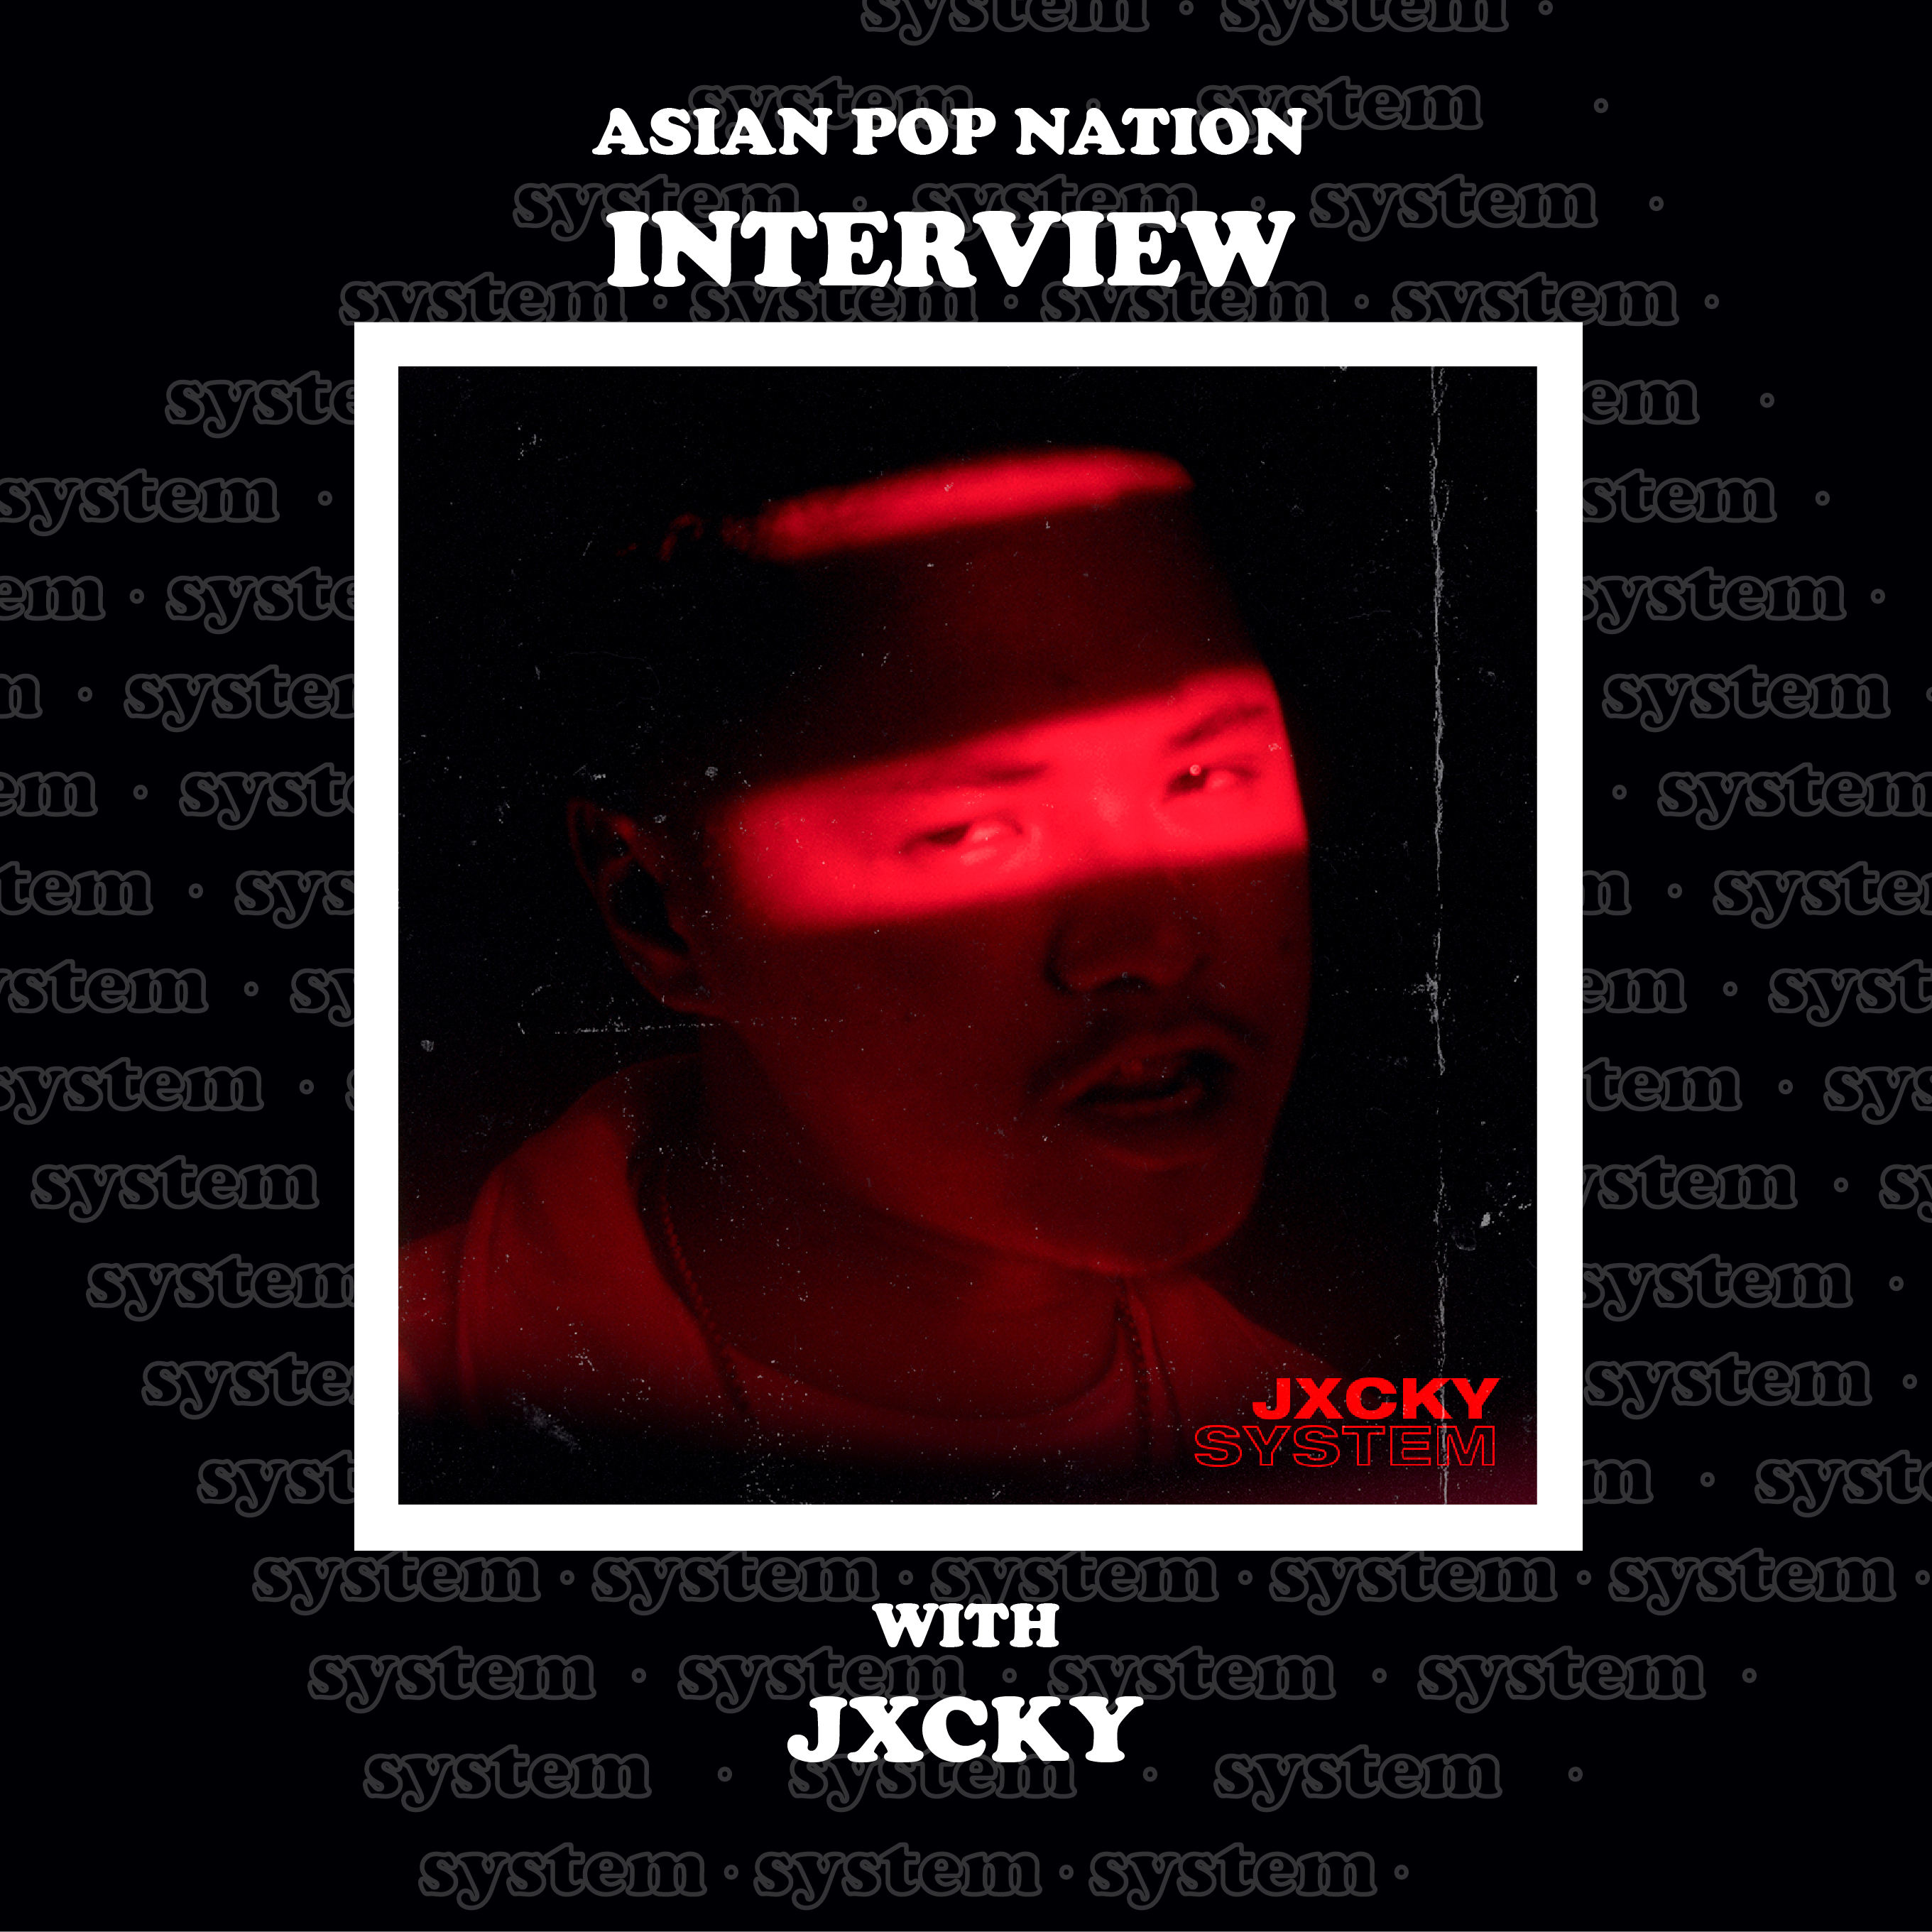 APN's Interview with JXCKY